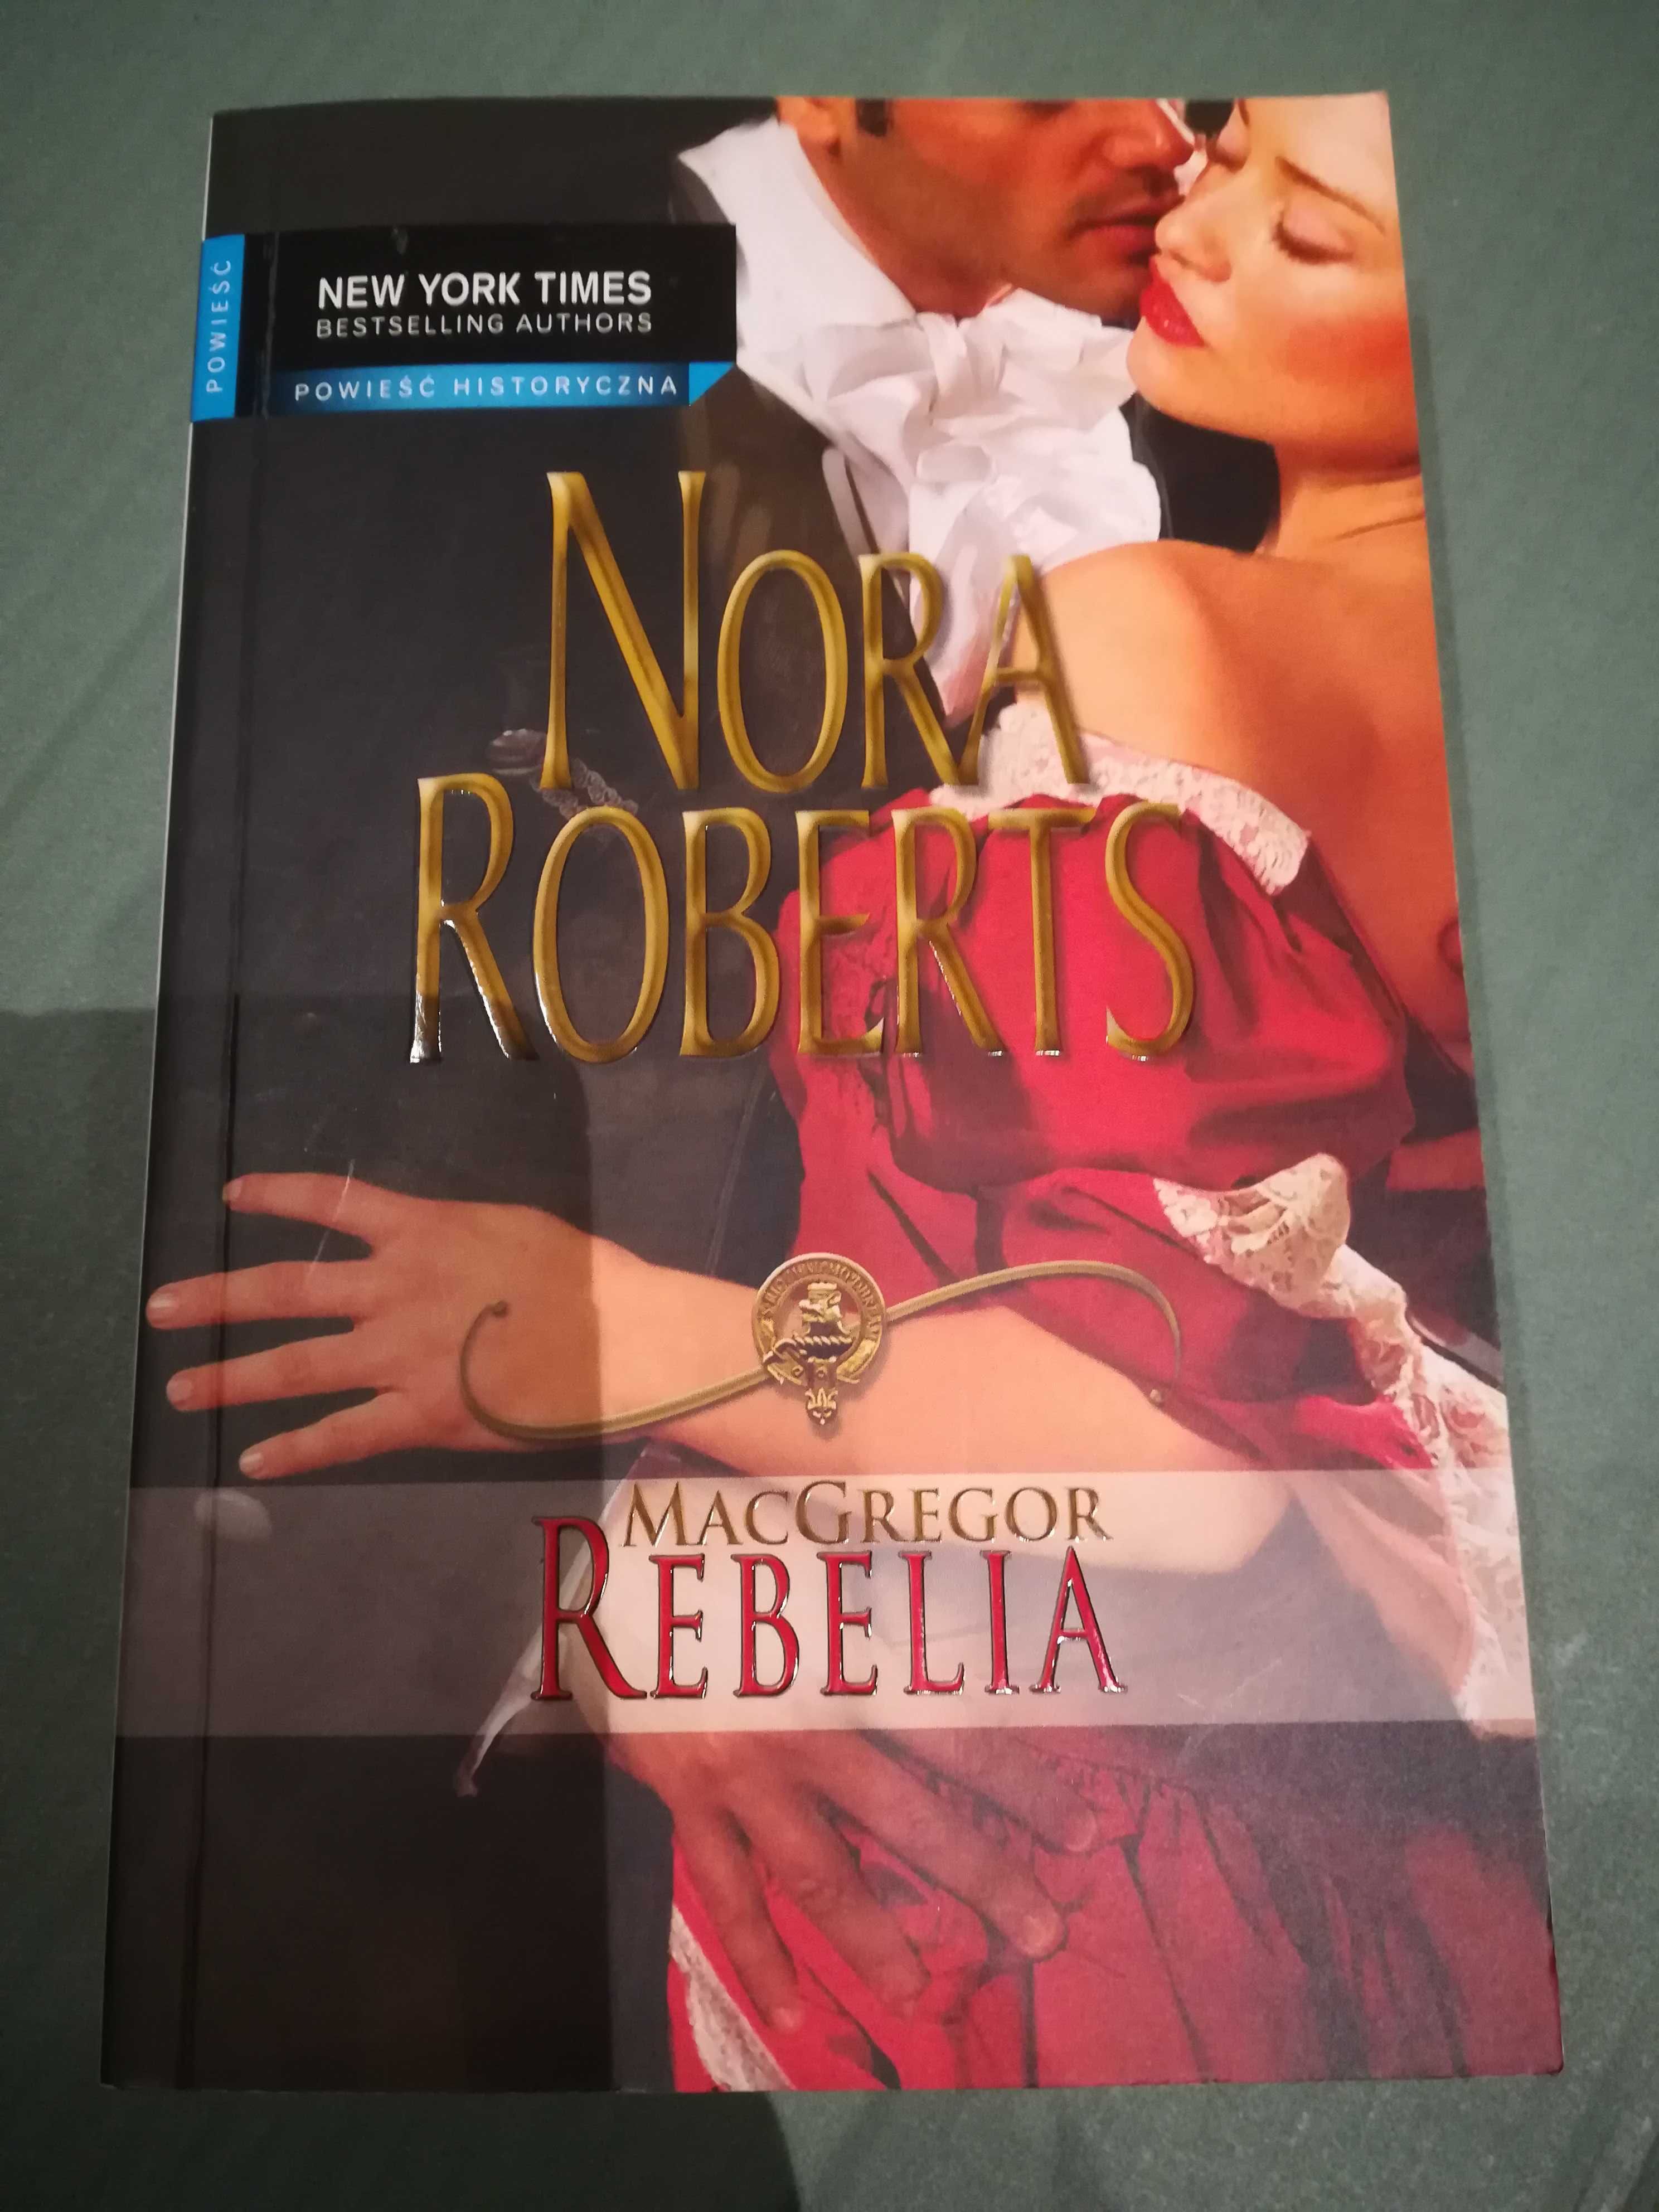 Nora Roberts "Rebelia"